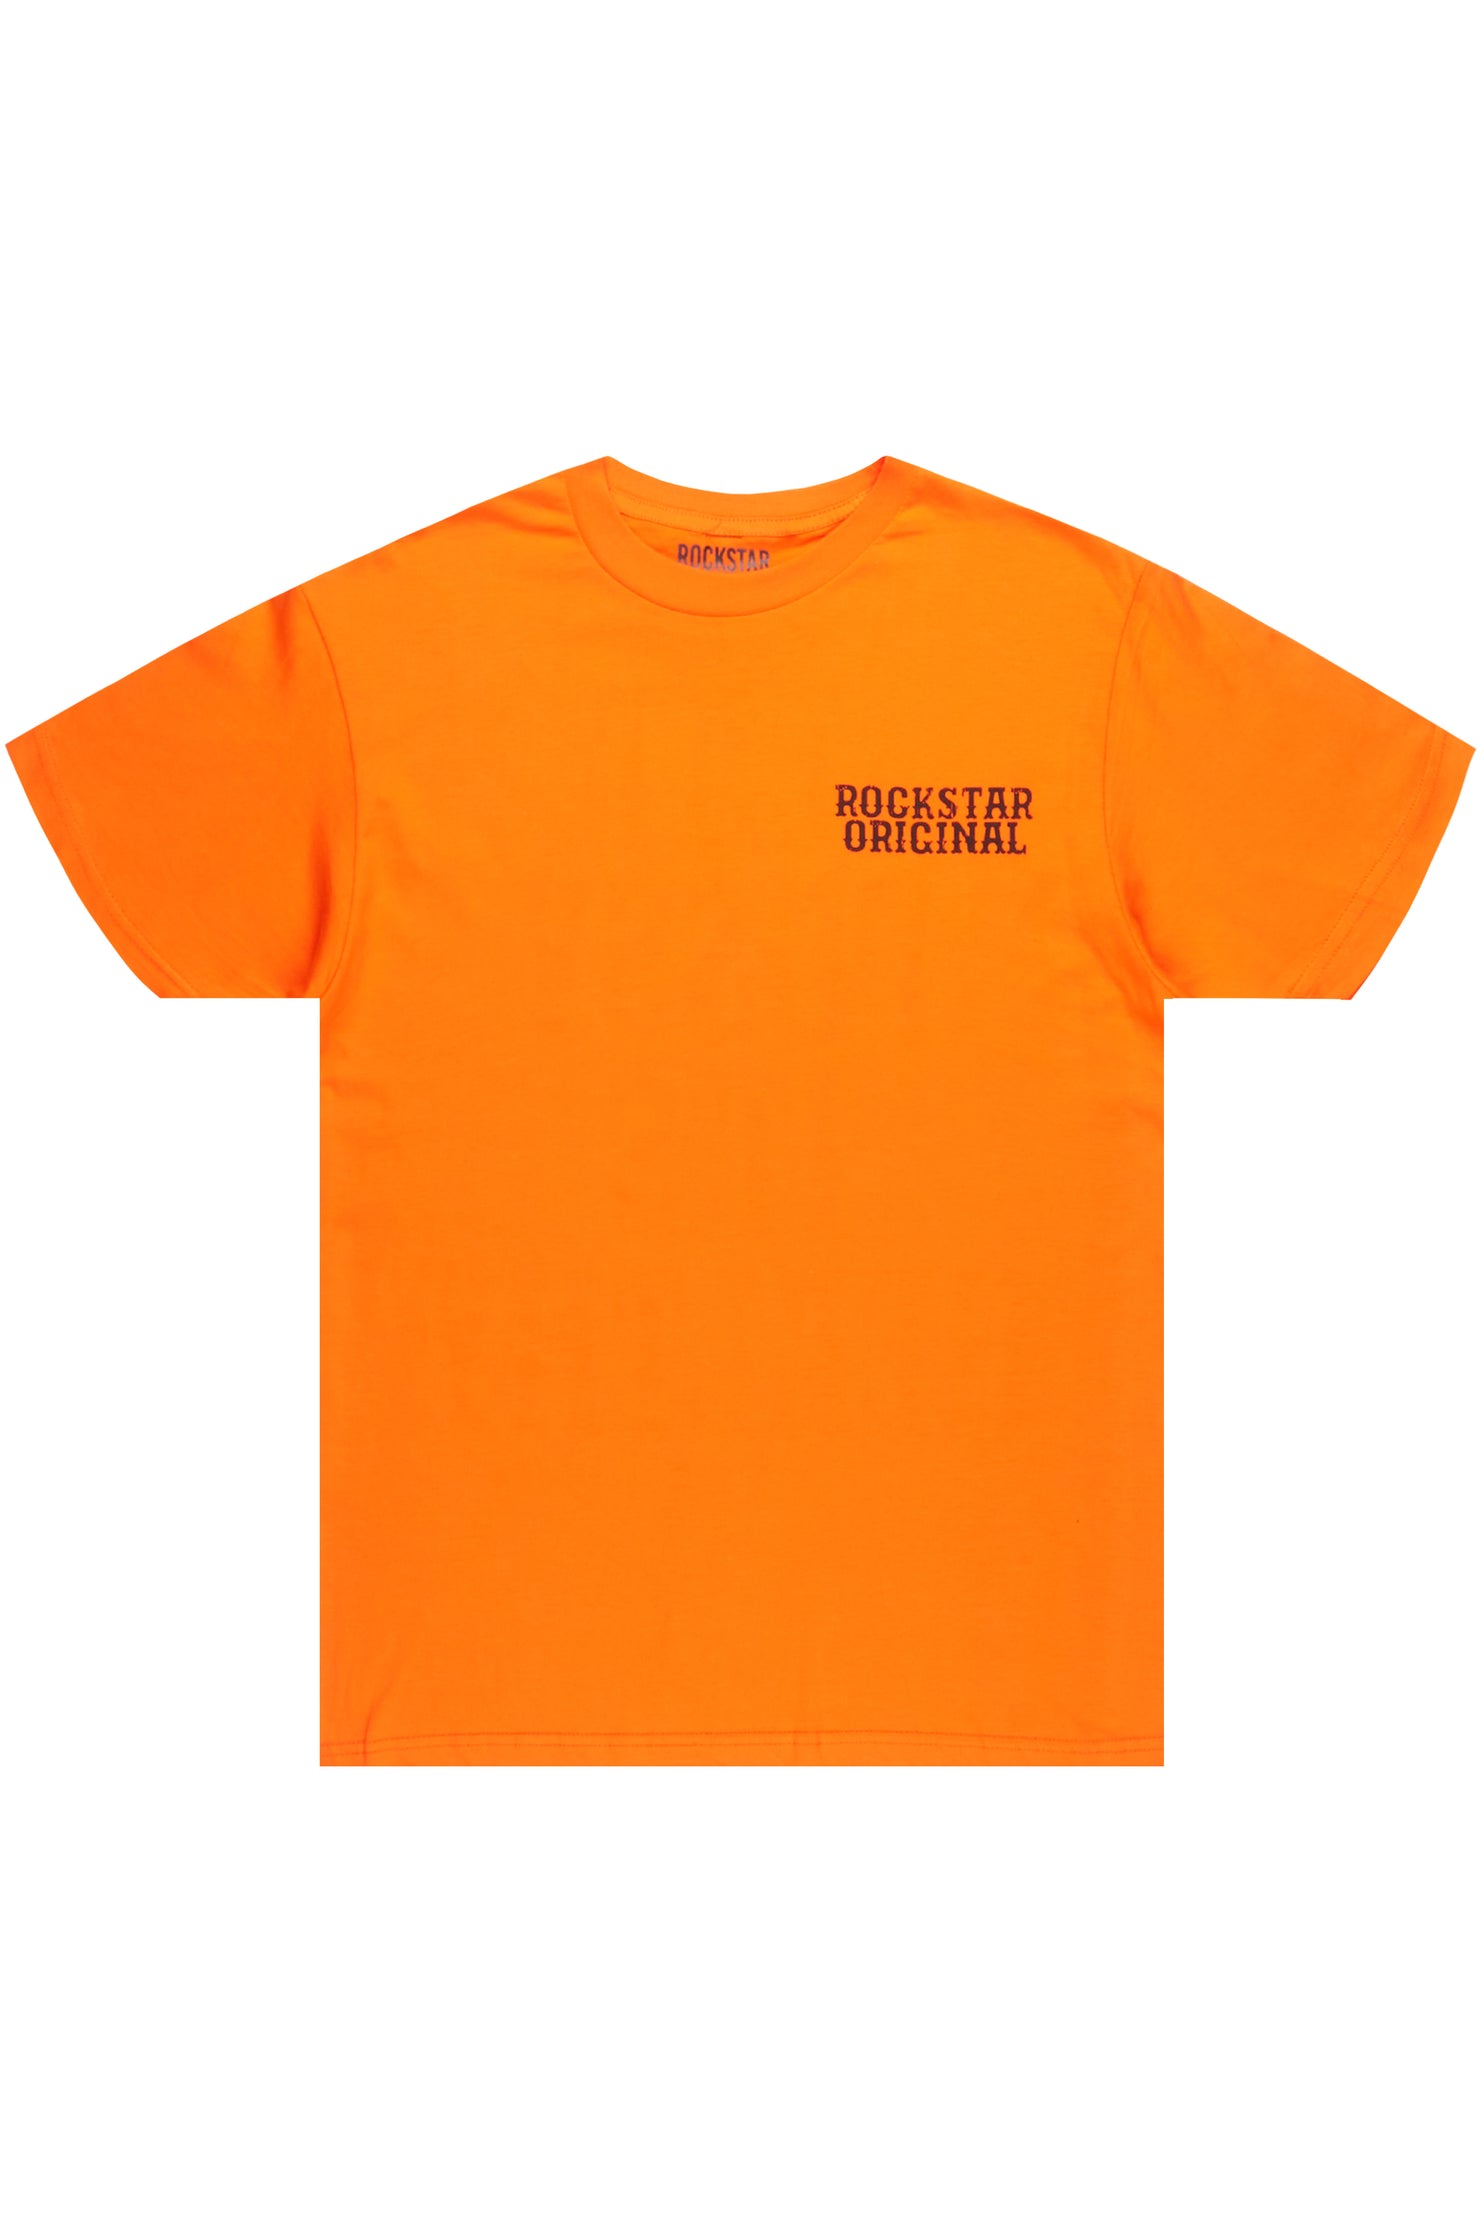 Posse Orange Graphic T-Shirt